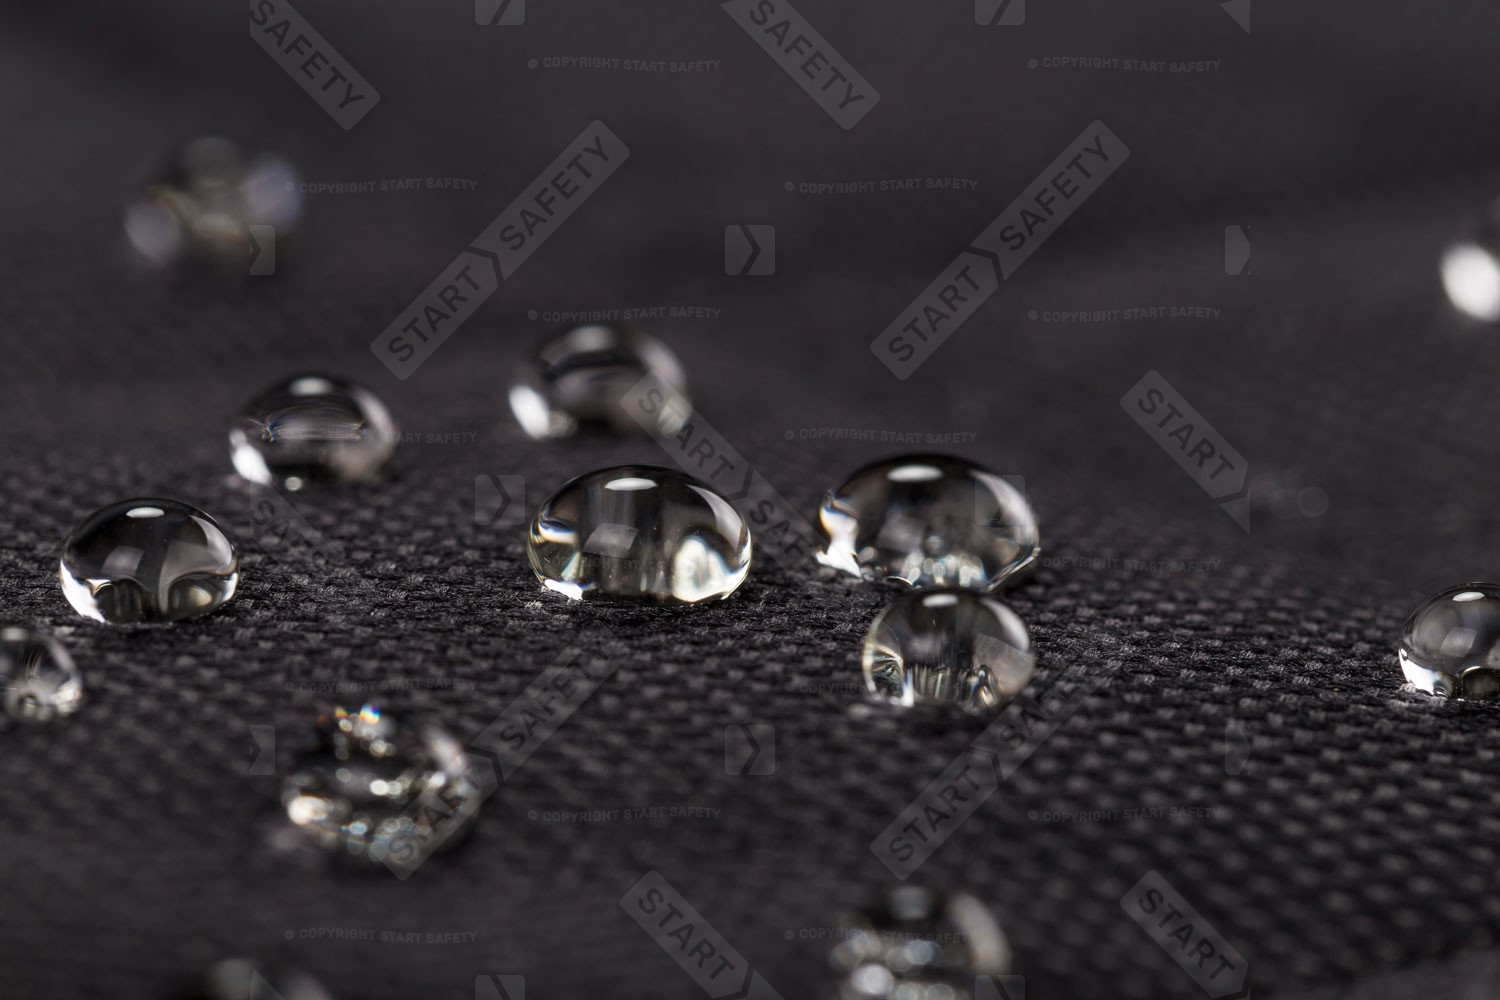 Water repellant fabric